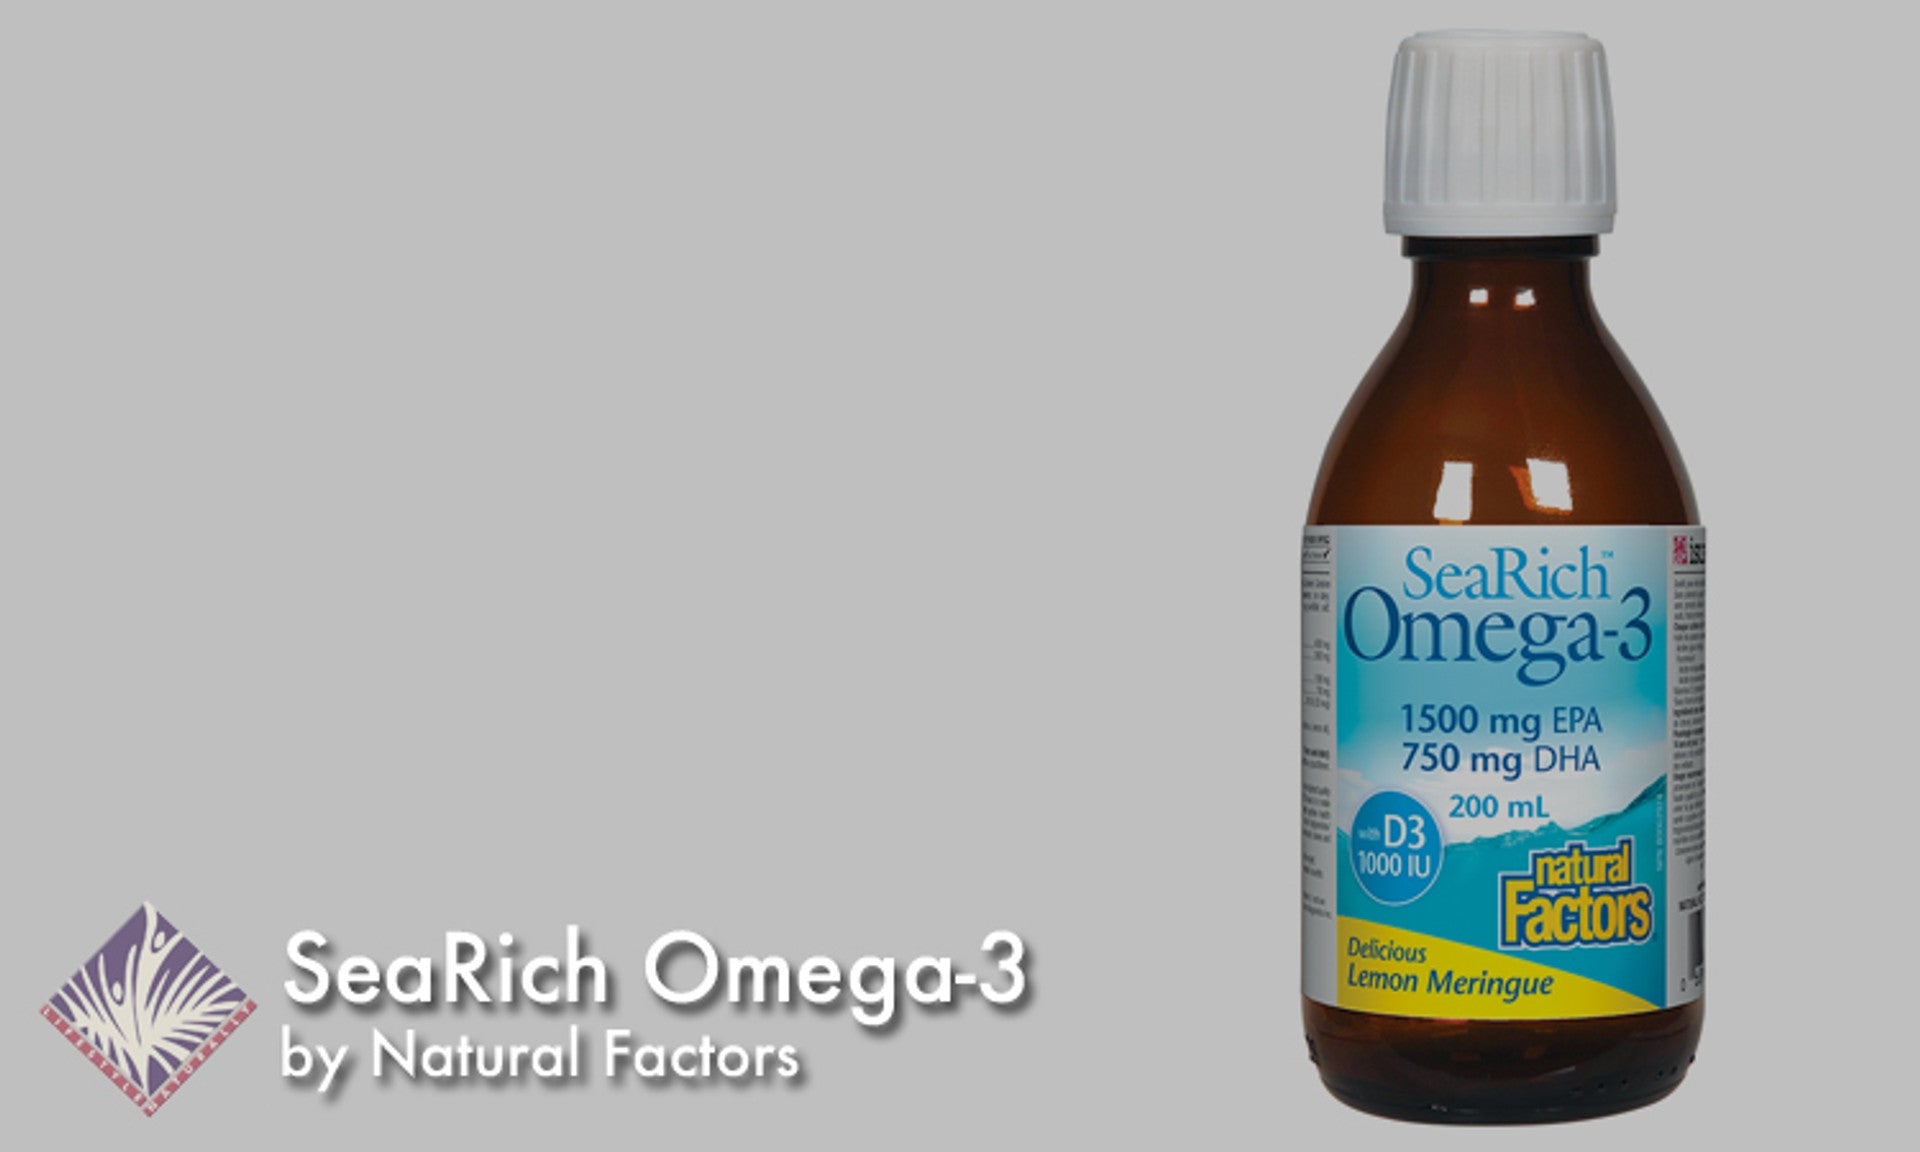 SeaRich Omega-3 - A Delicious-Tasting Fish Oil!